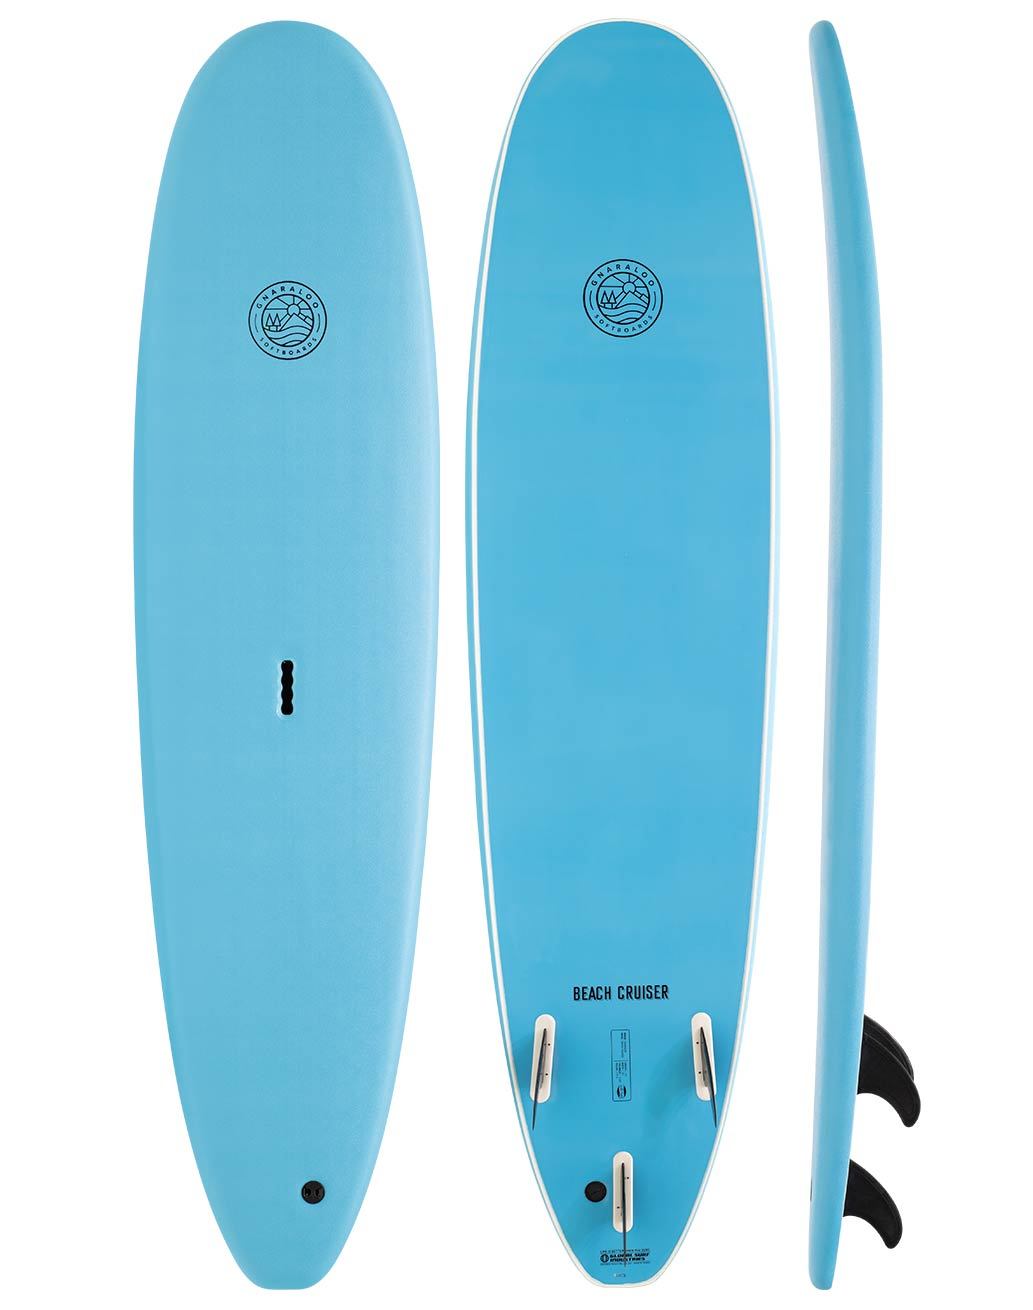 Gnaraloo Soft Surfboards - Beach Cruiser blue soft surfboard